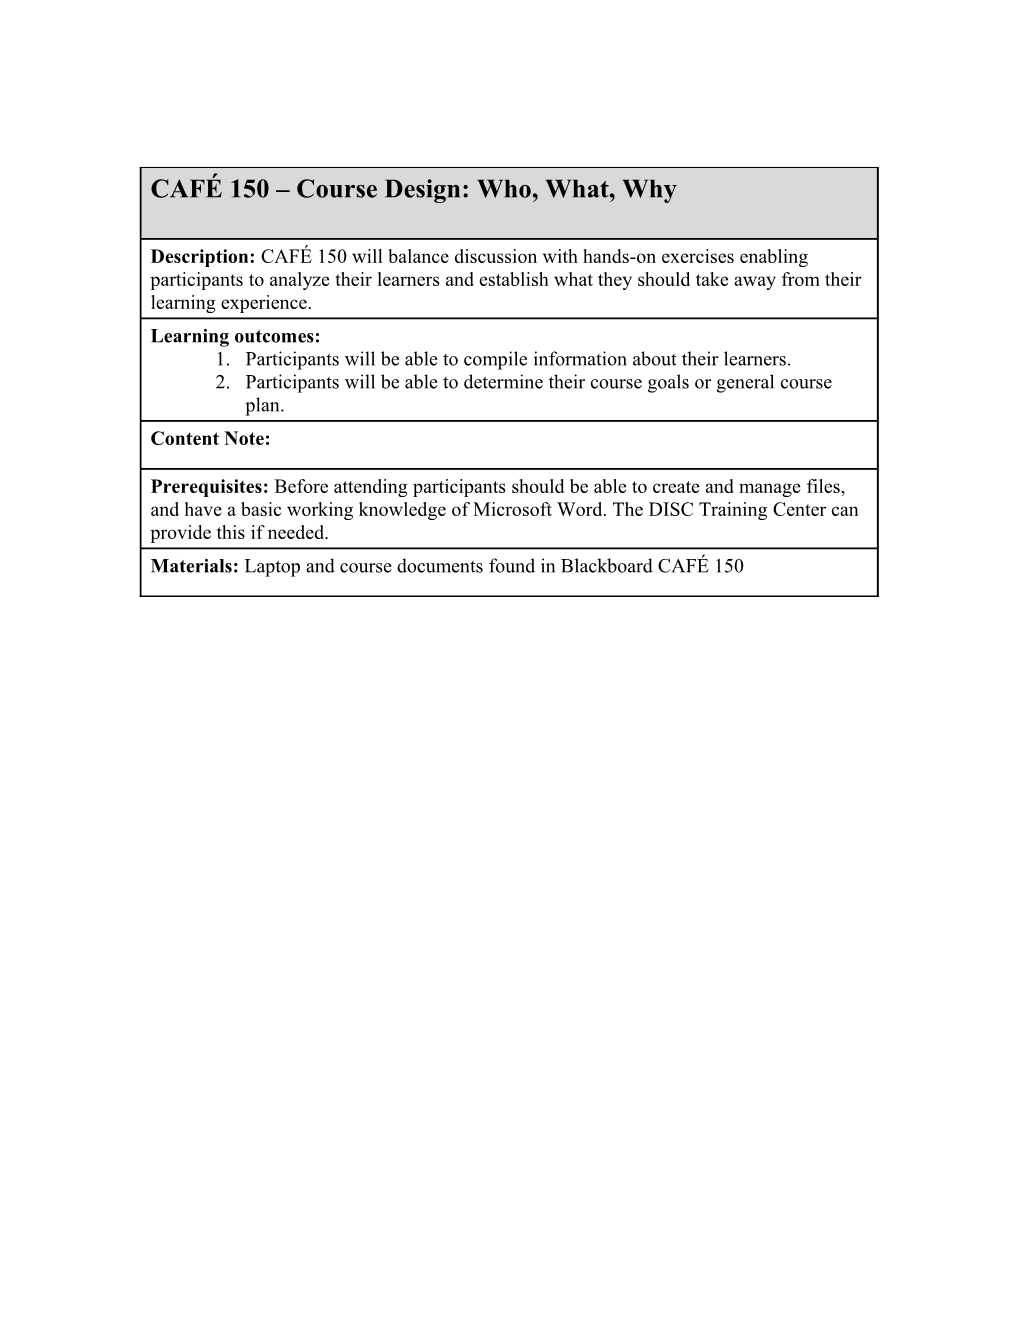 CAFÉ 150 Course Design: Who, What, Why